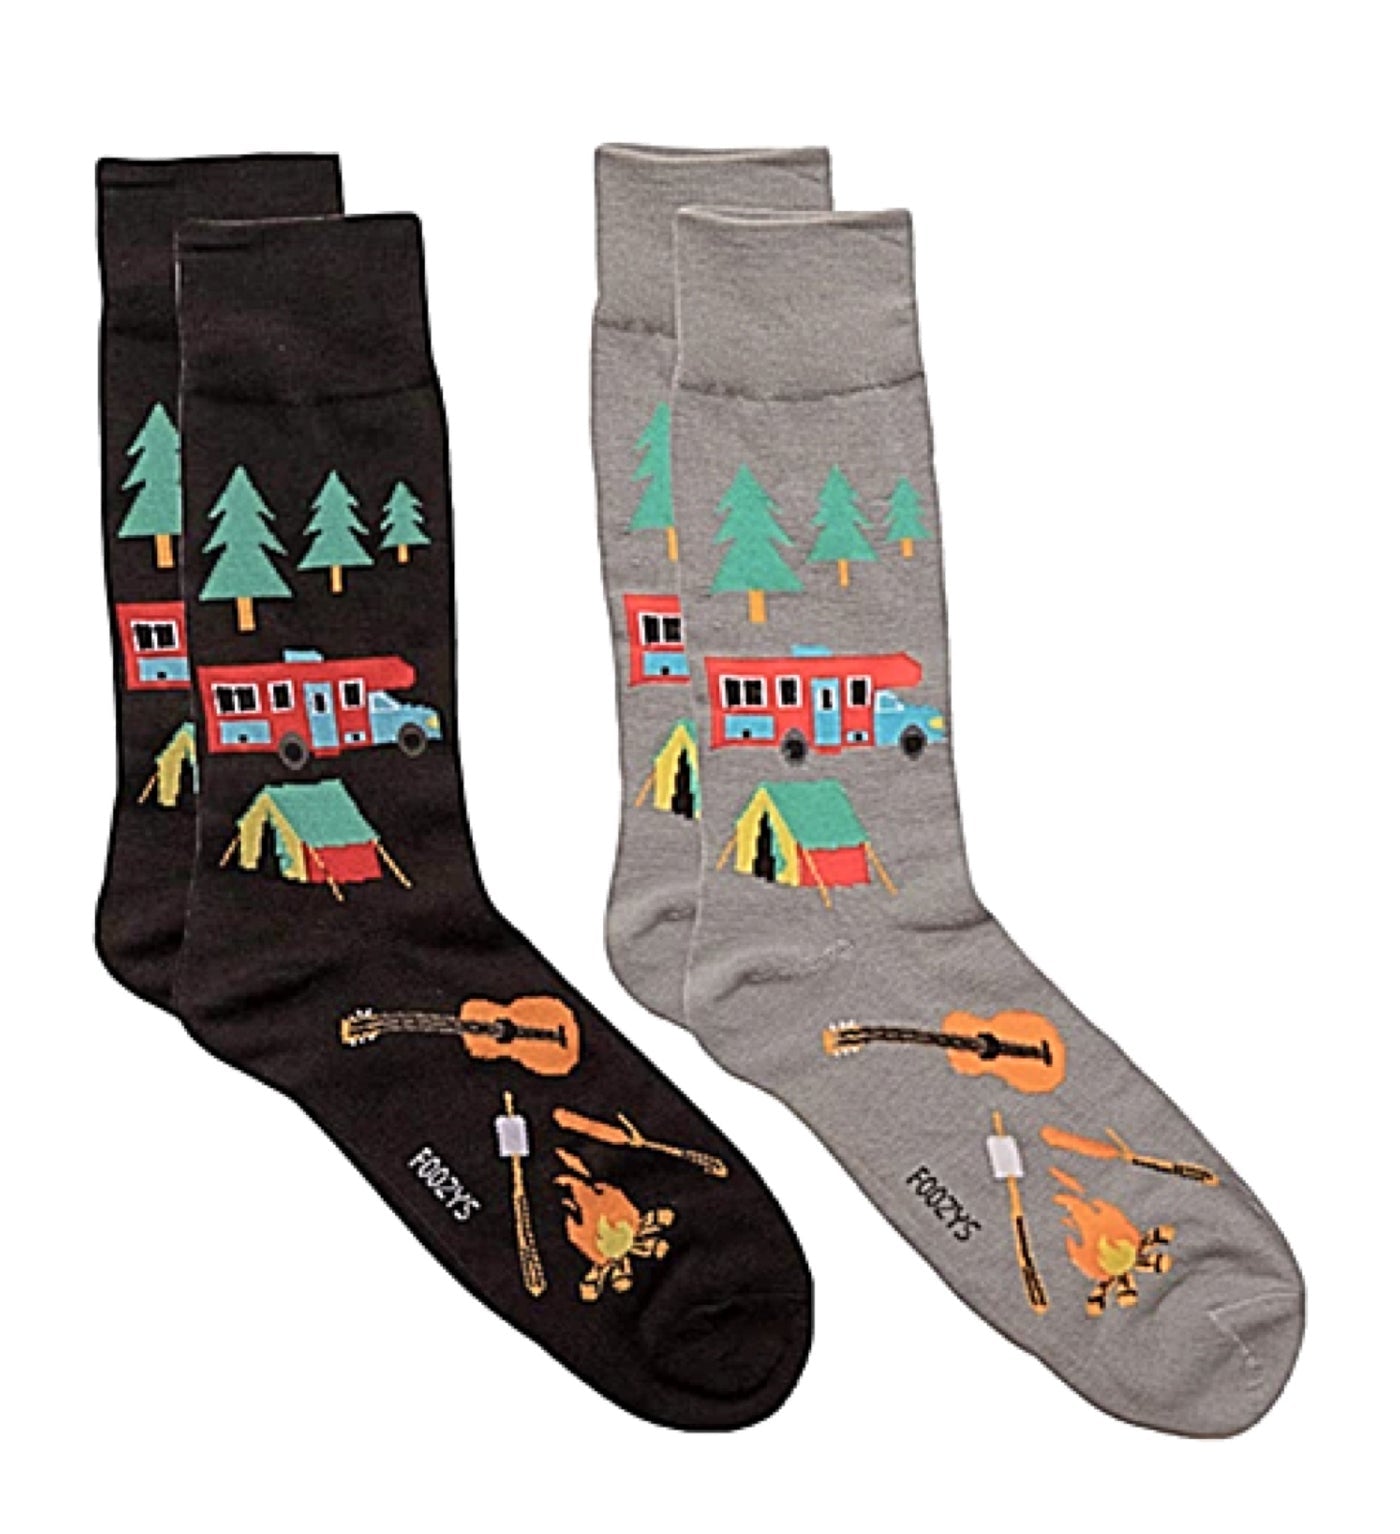 Camping Men's Socks – Gifted